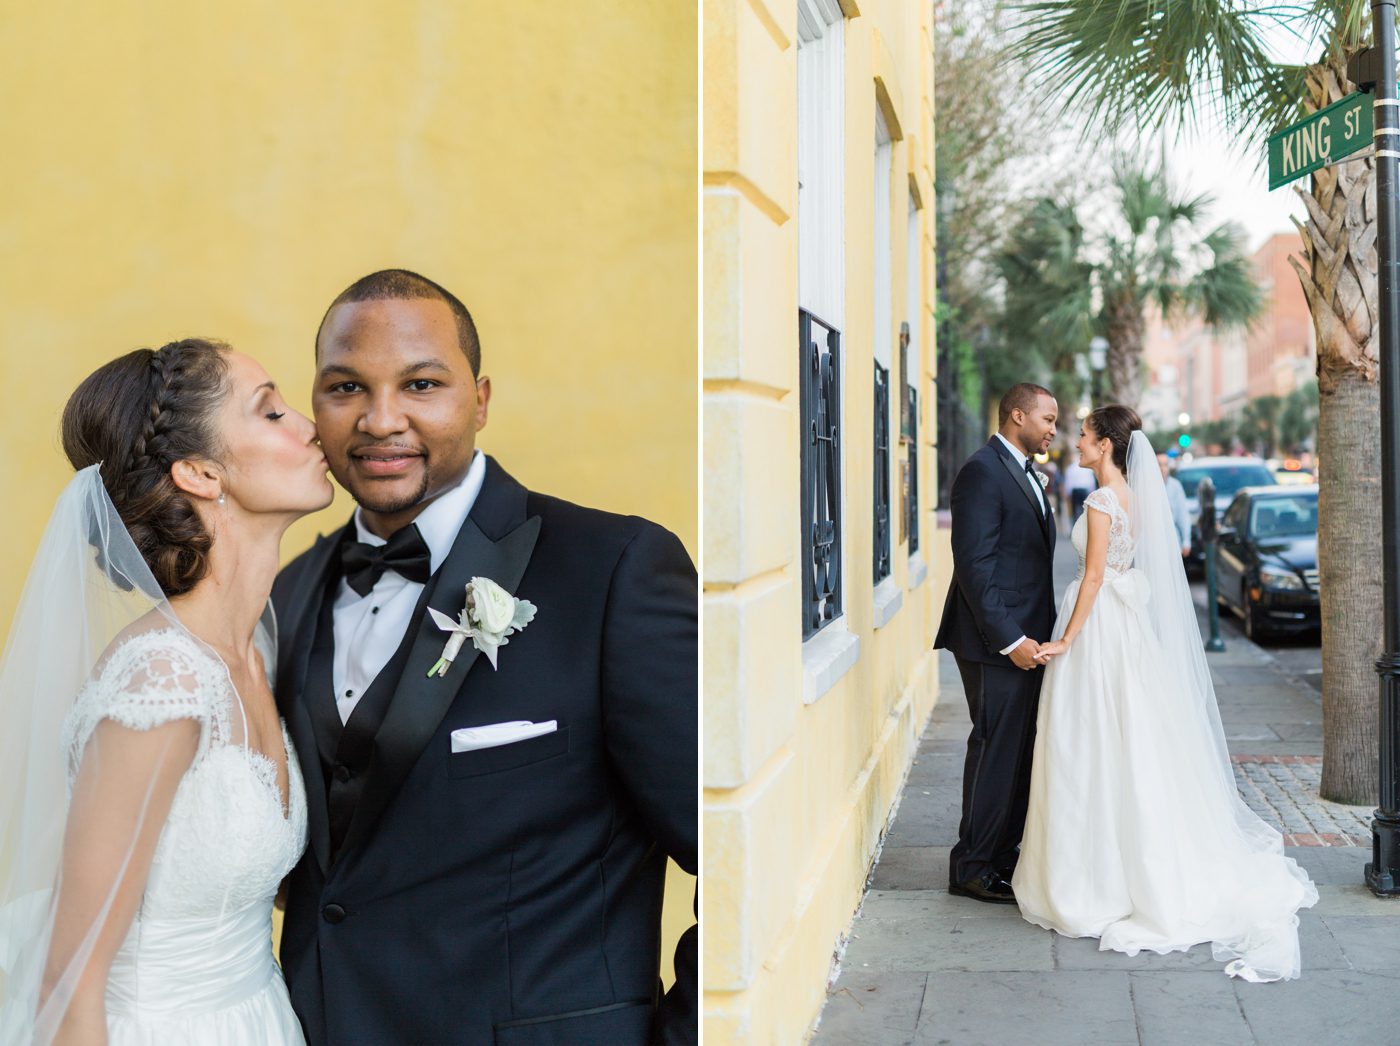 Wedding pictures on King St downtown Charleston | Elegant William Aiken House Wedding Photos | Charleston SC wedding photographers Catherine Ann Photography